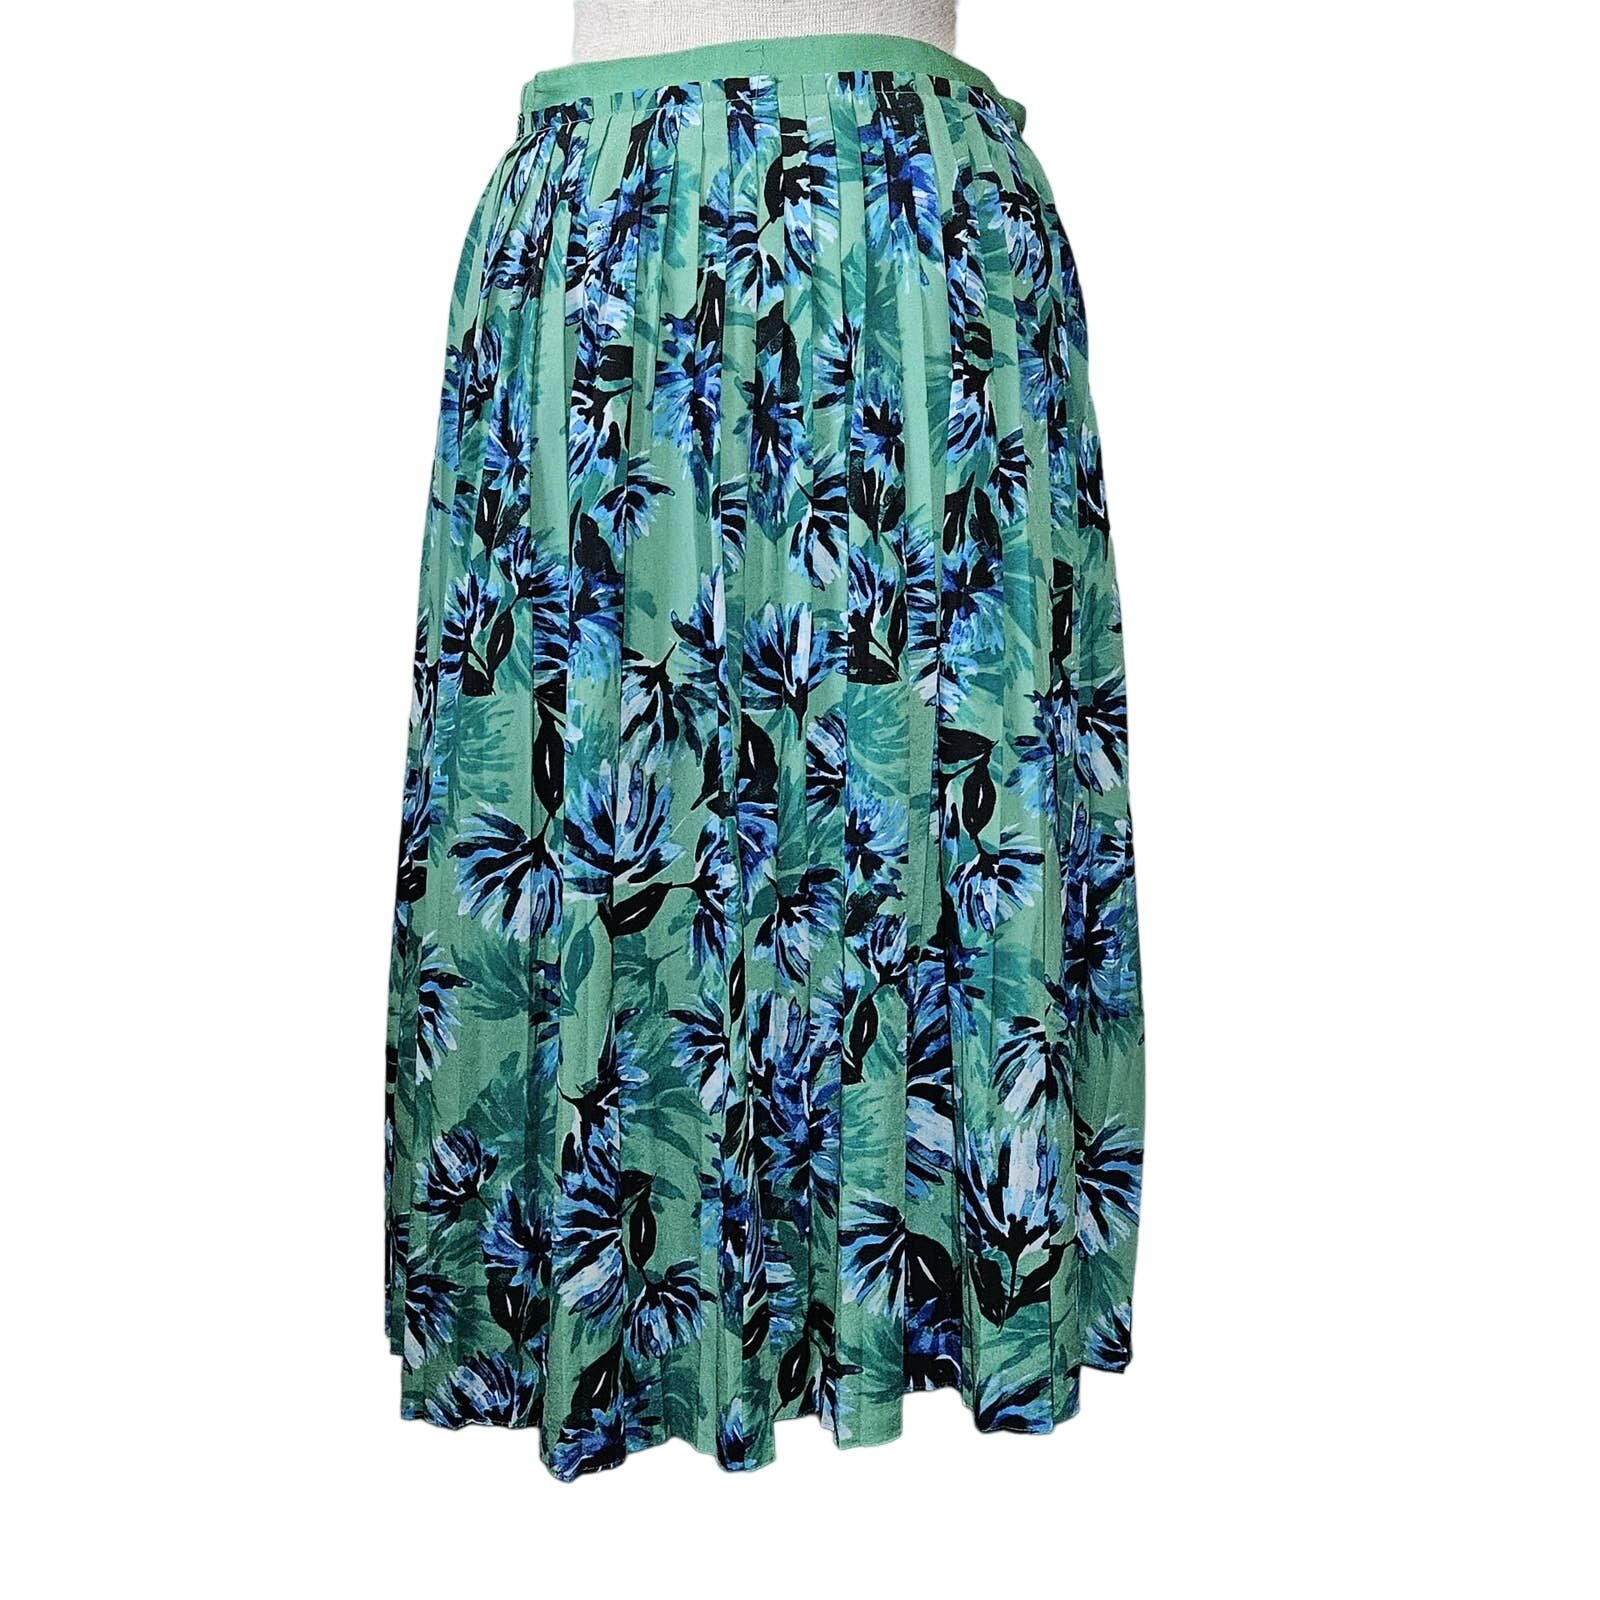 Amazing Banana Republic Floral Midi Skirt Size 2 JN5Ei3gQB US Outlet